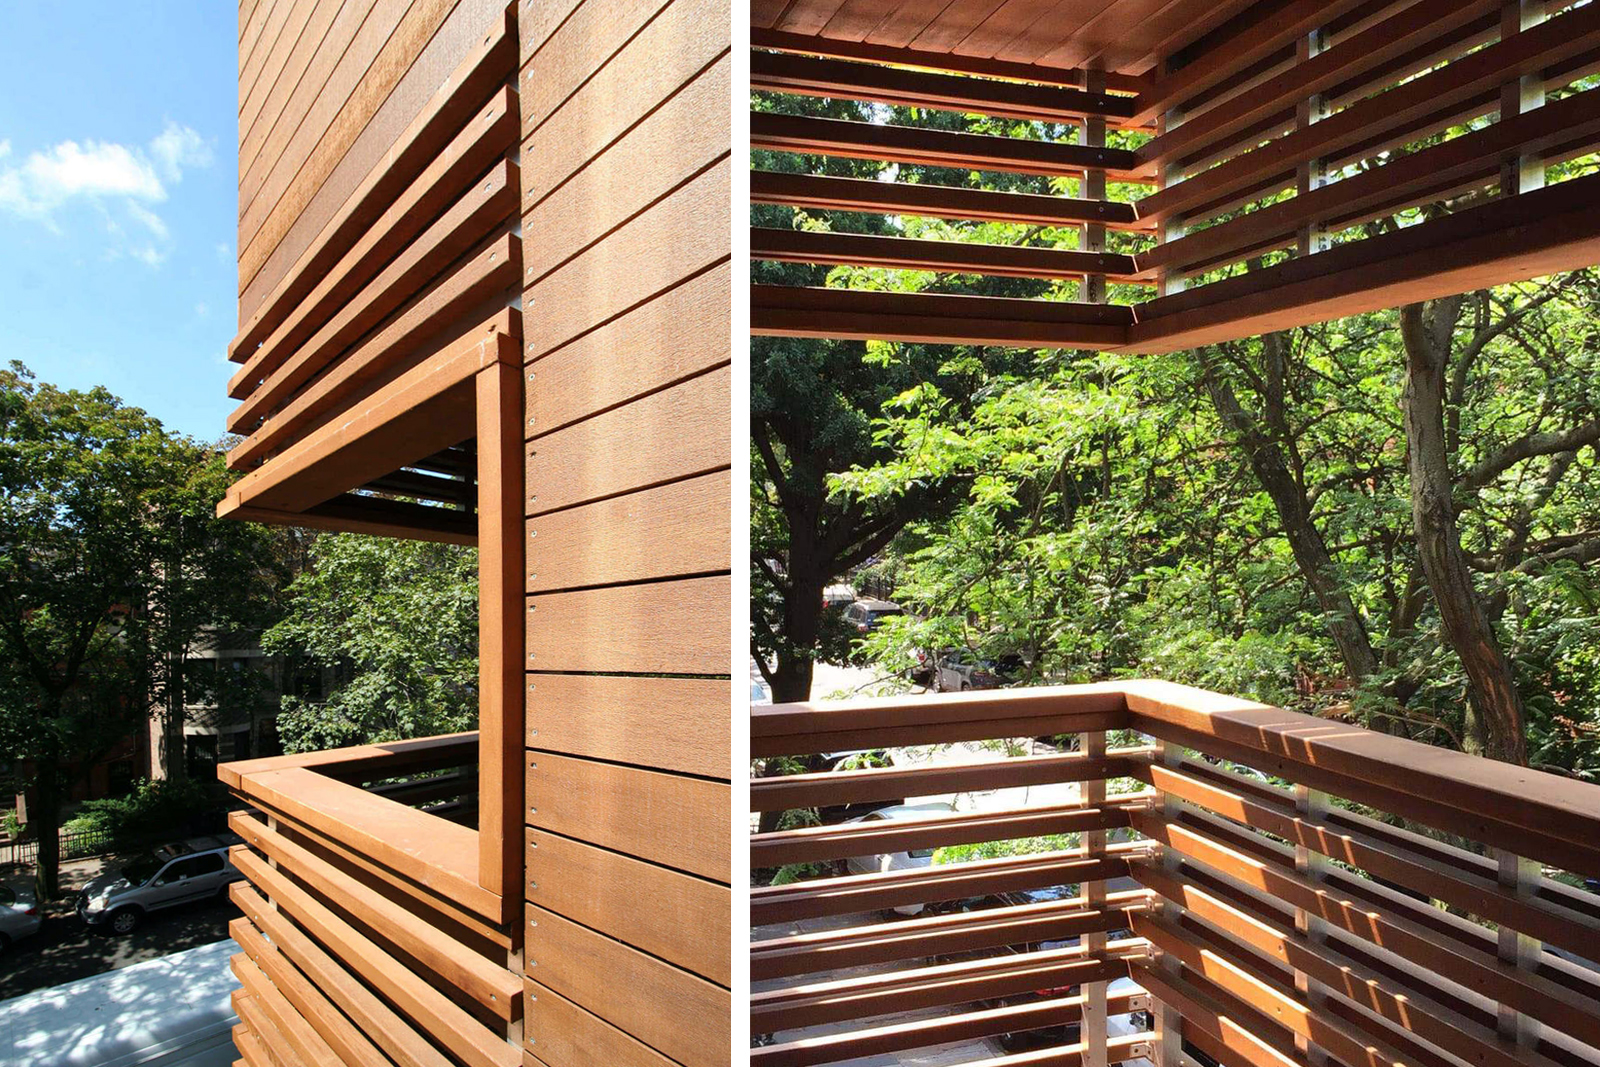 res4-resoltuion-4-architecture-modern-brownstone-home-renovation-exterior-cedar-balcony-siding.jpg